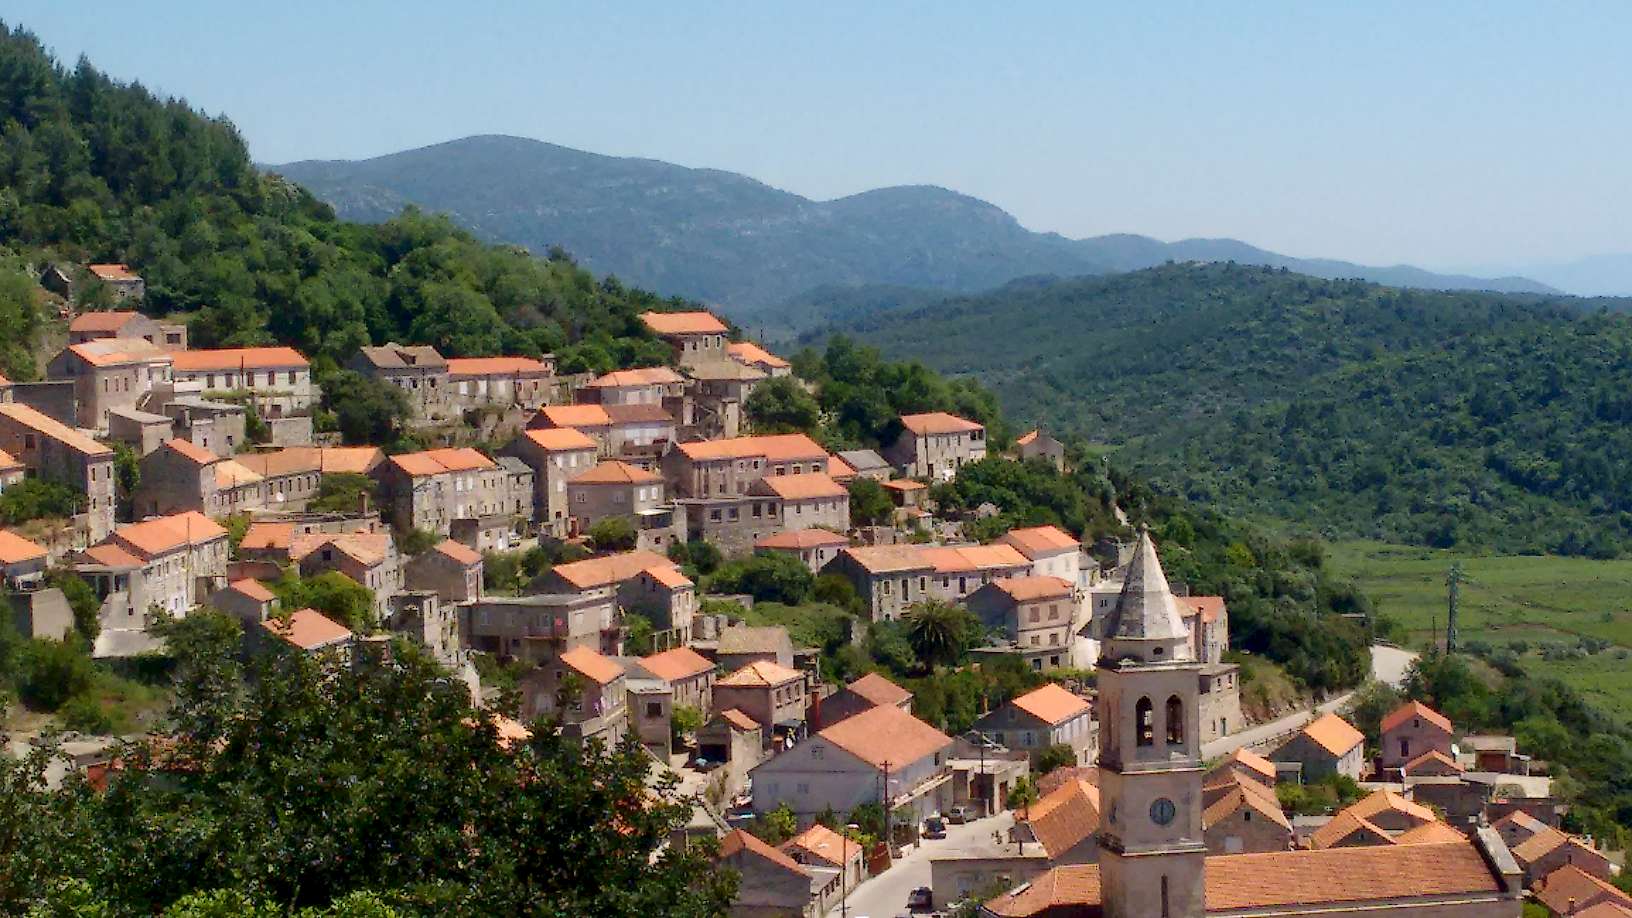 Overlooking the city of Ston, Croatia.